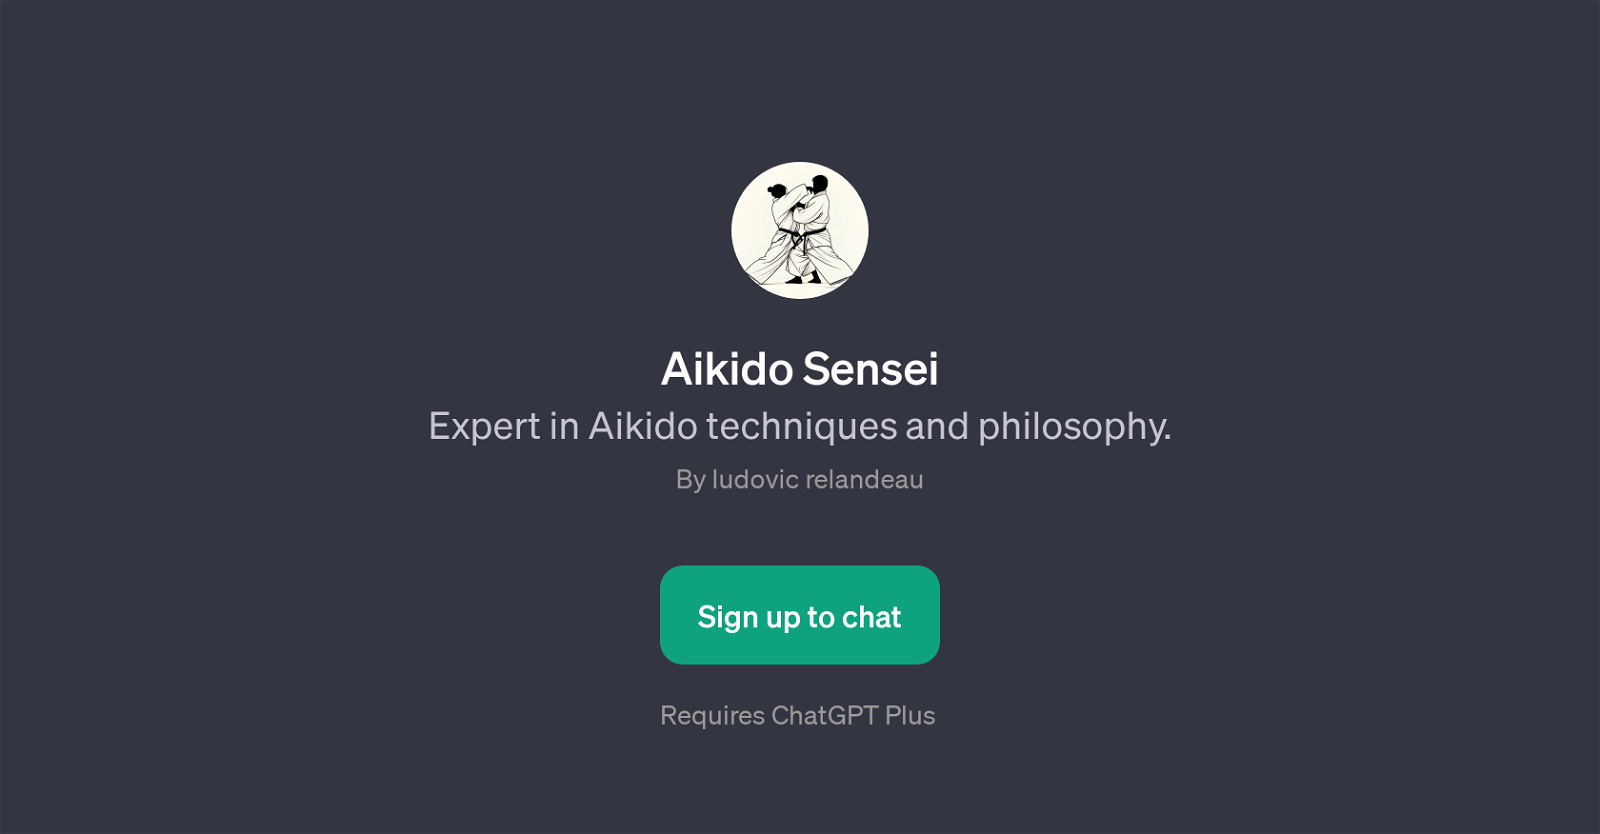 Aikido Sensei website